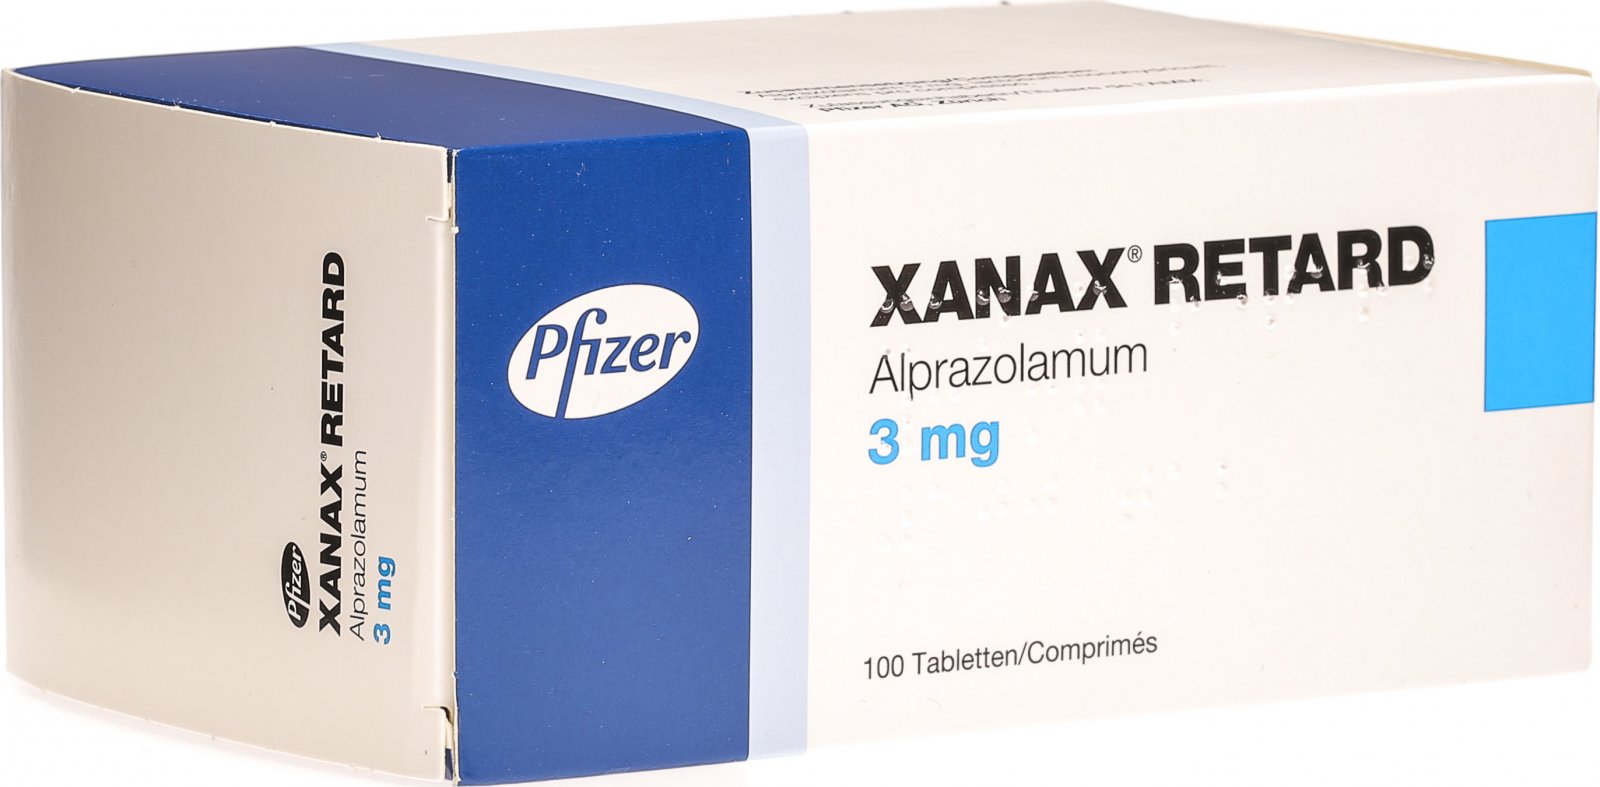 Ксанакс купить в аптеке. Xanax 2mg упаковка. Ксанакс 2 мг Файзер. Ксанакс 0.5 мг алпразолам. Ксанакс ретард.